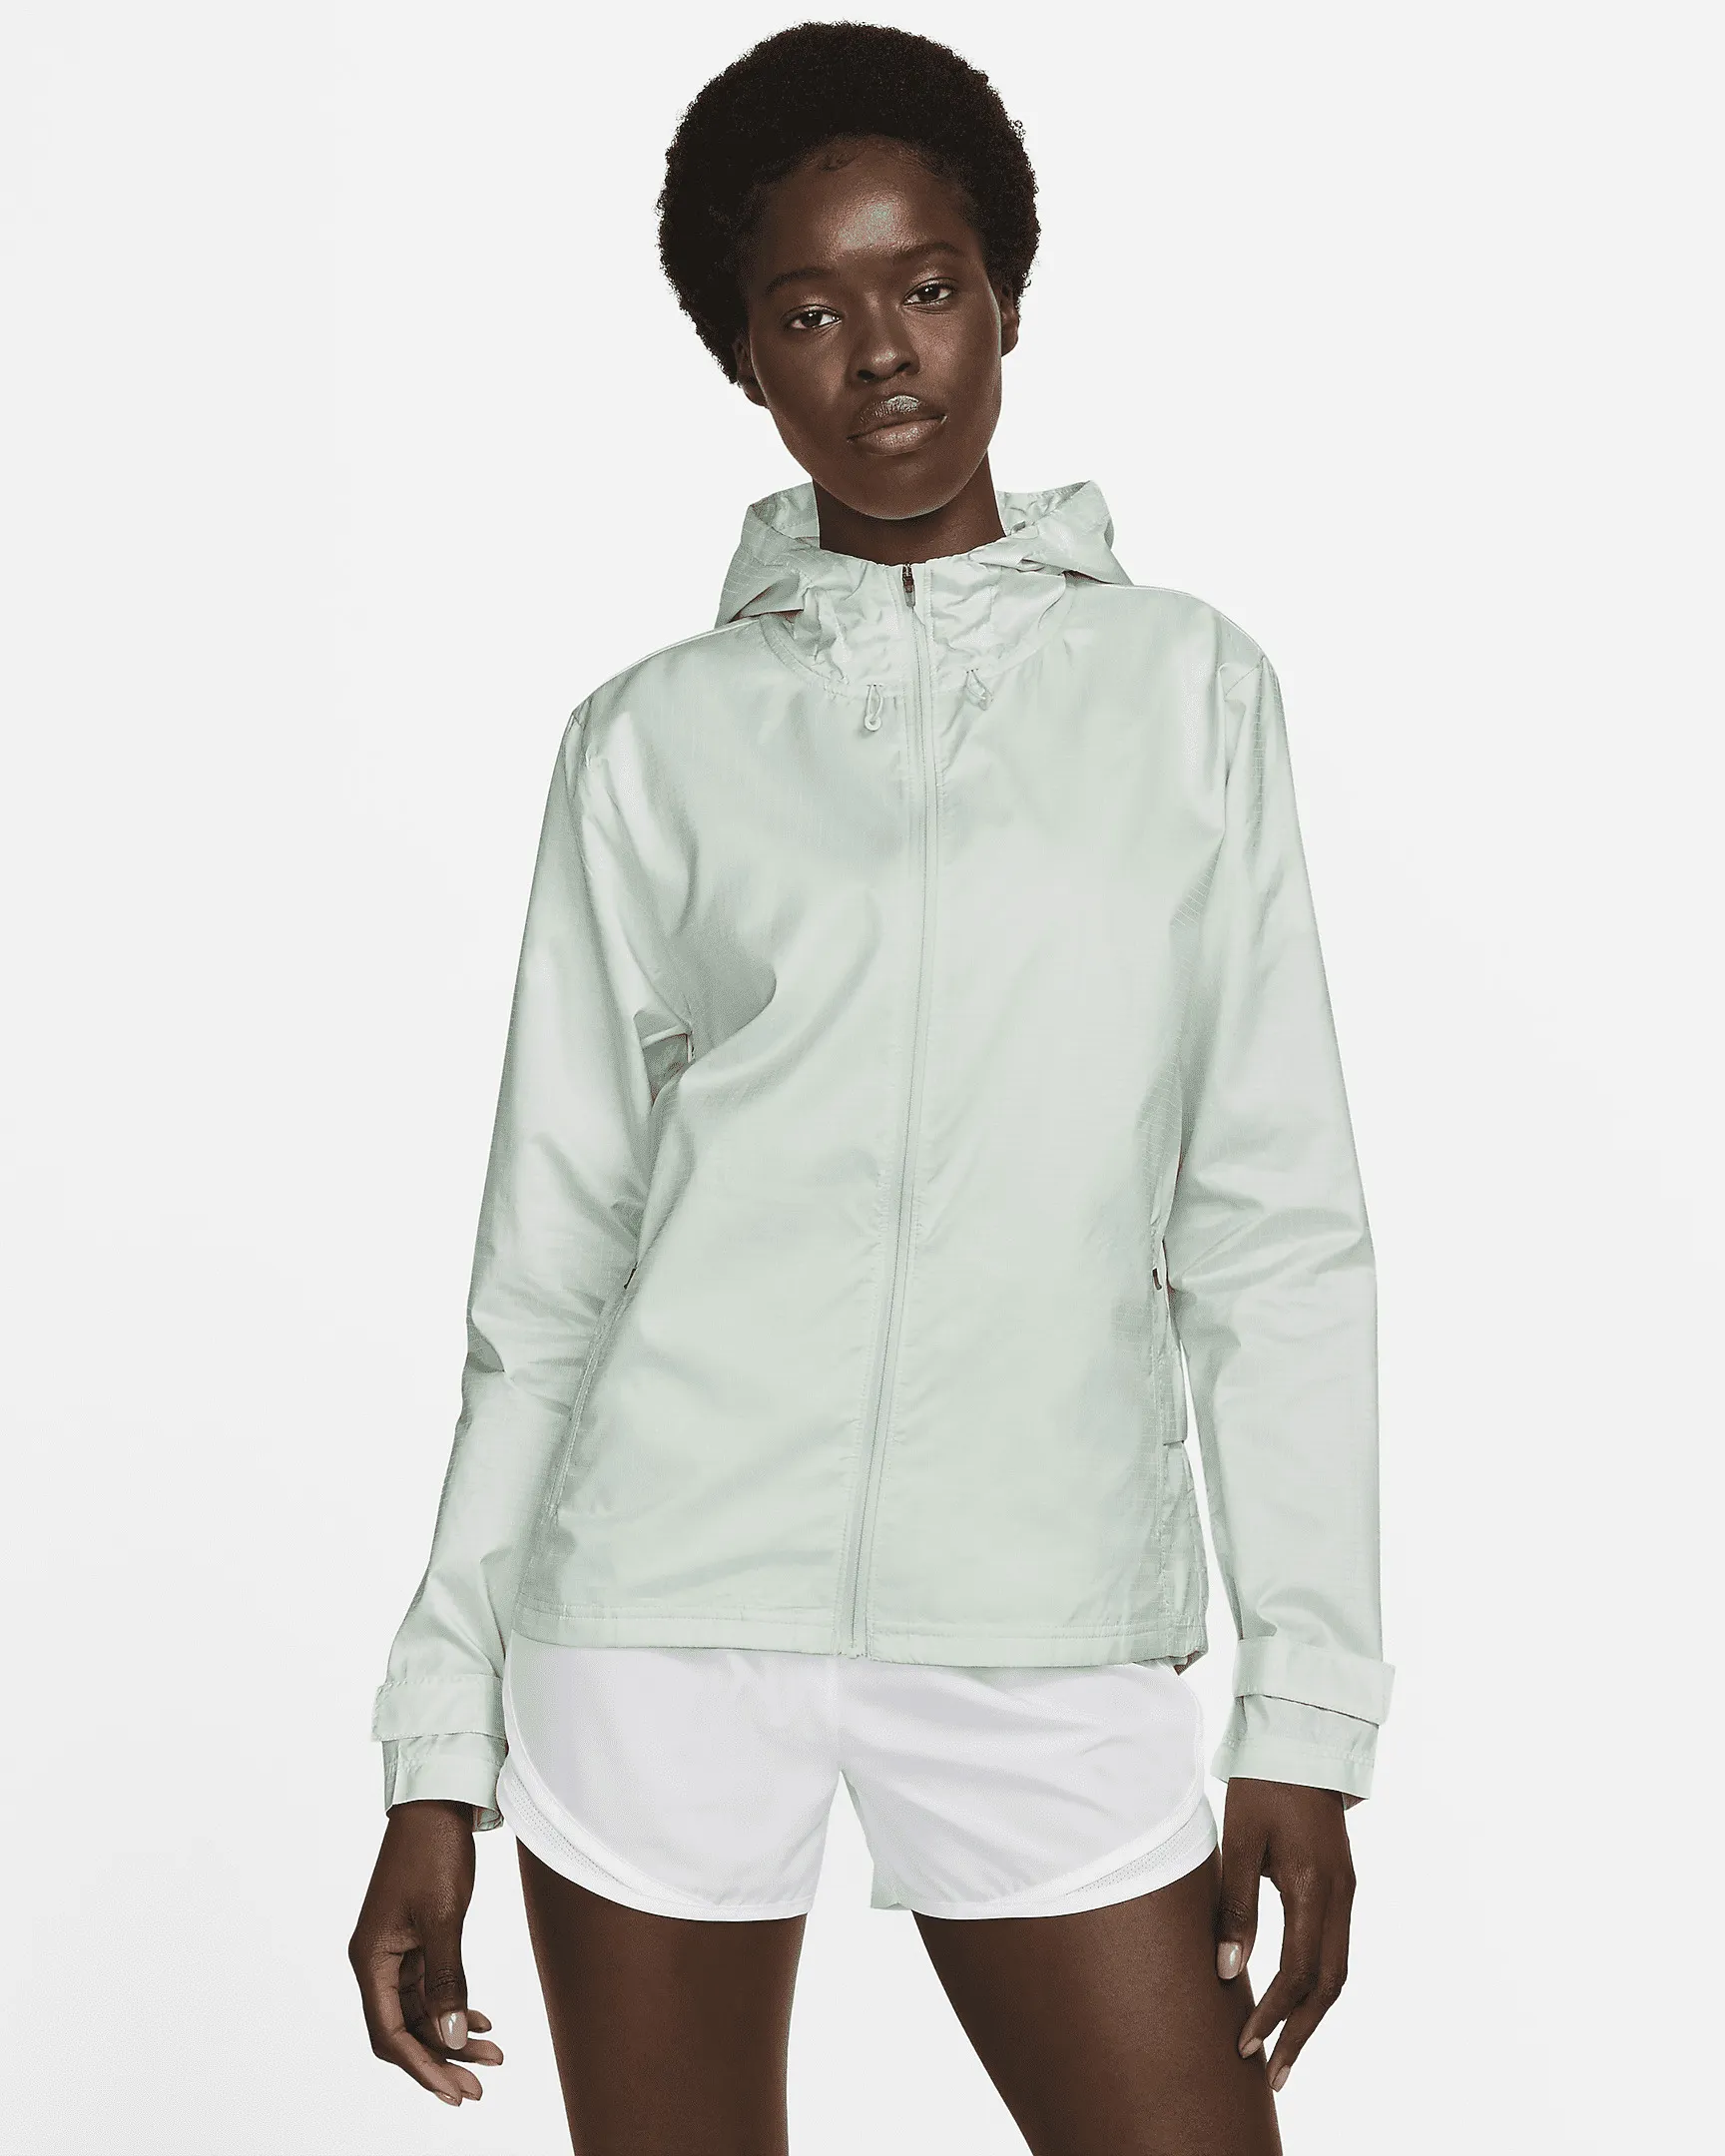 2023 Factory Custom Ihr eigenes Logo 100% Nylon Training Farbkontrast Sport Wind breaker Jacken für Frauen